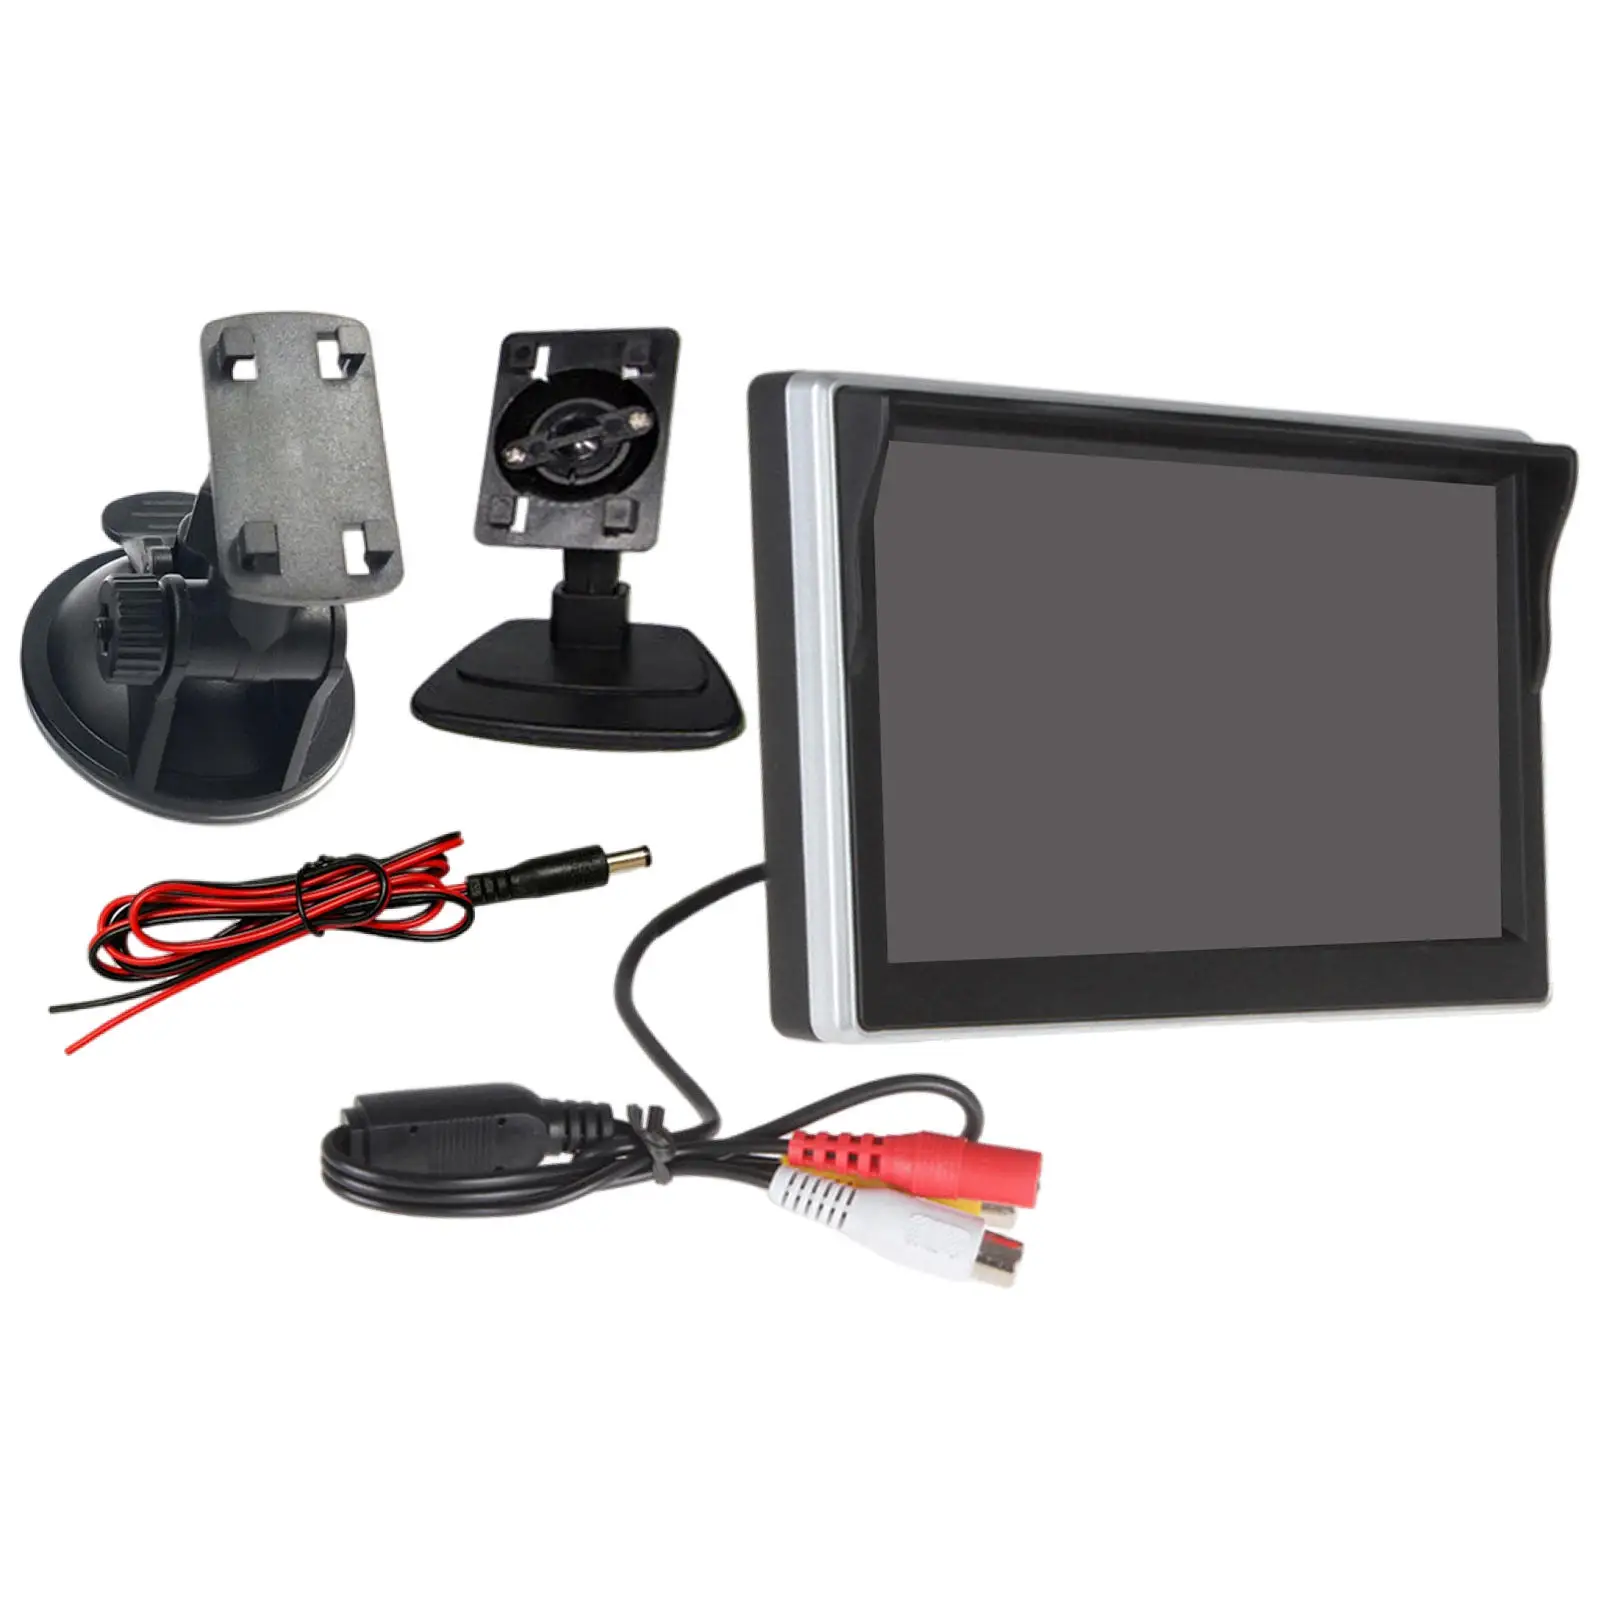 5 inch Car LCD Monitor Screen Mini HD 800x480 Resolution for DVD/Media Player